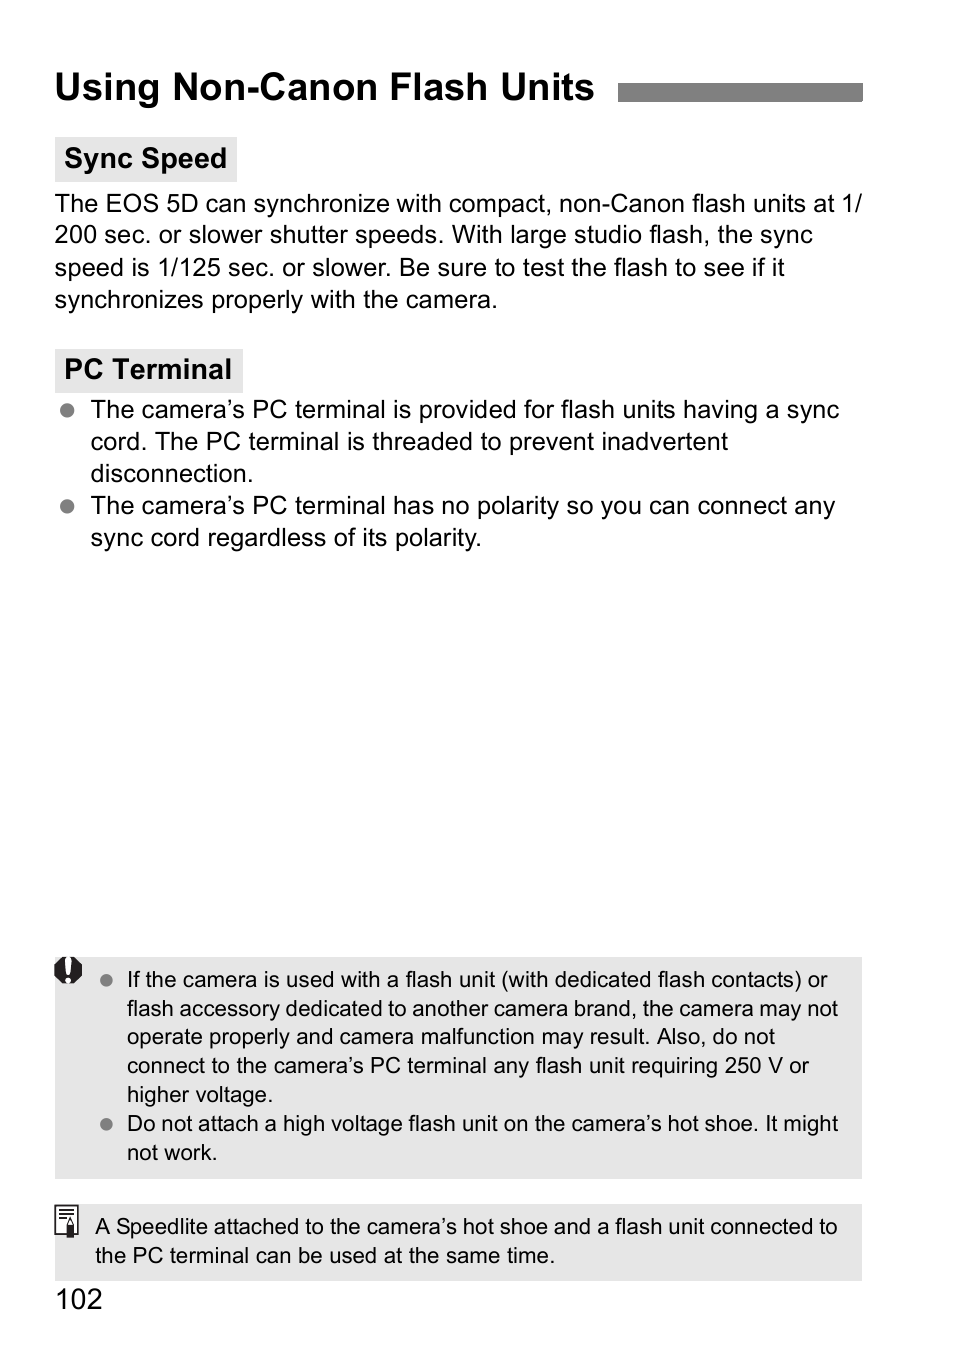 Using non-canon flash units | Canon EOS 5D User Manual | Page 102 / 184